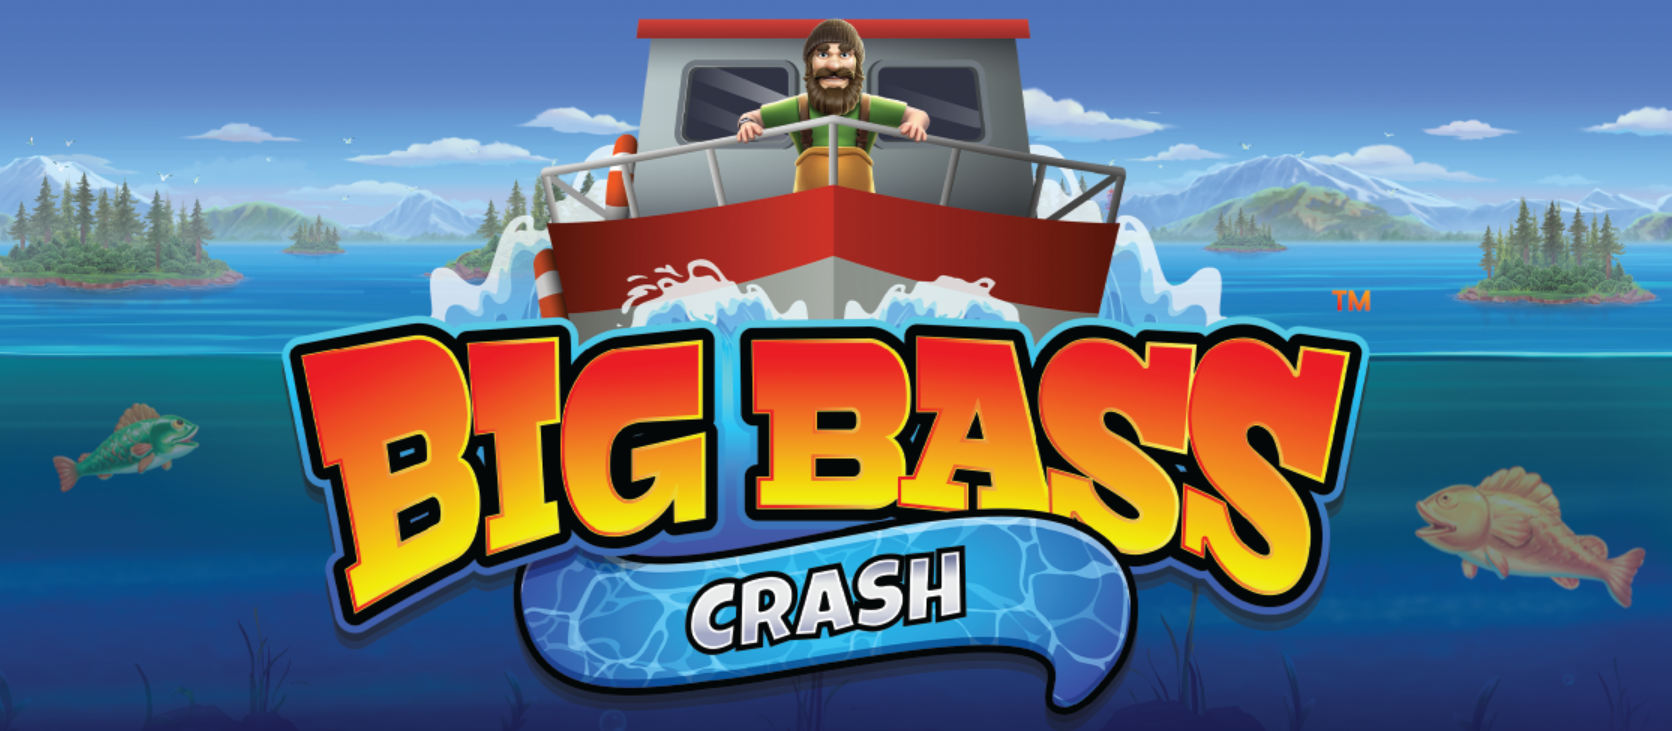 Big Bass Crash Slot Logo